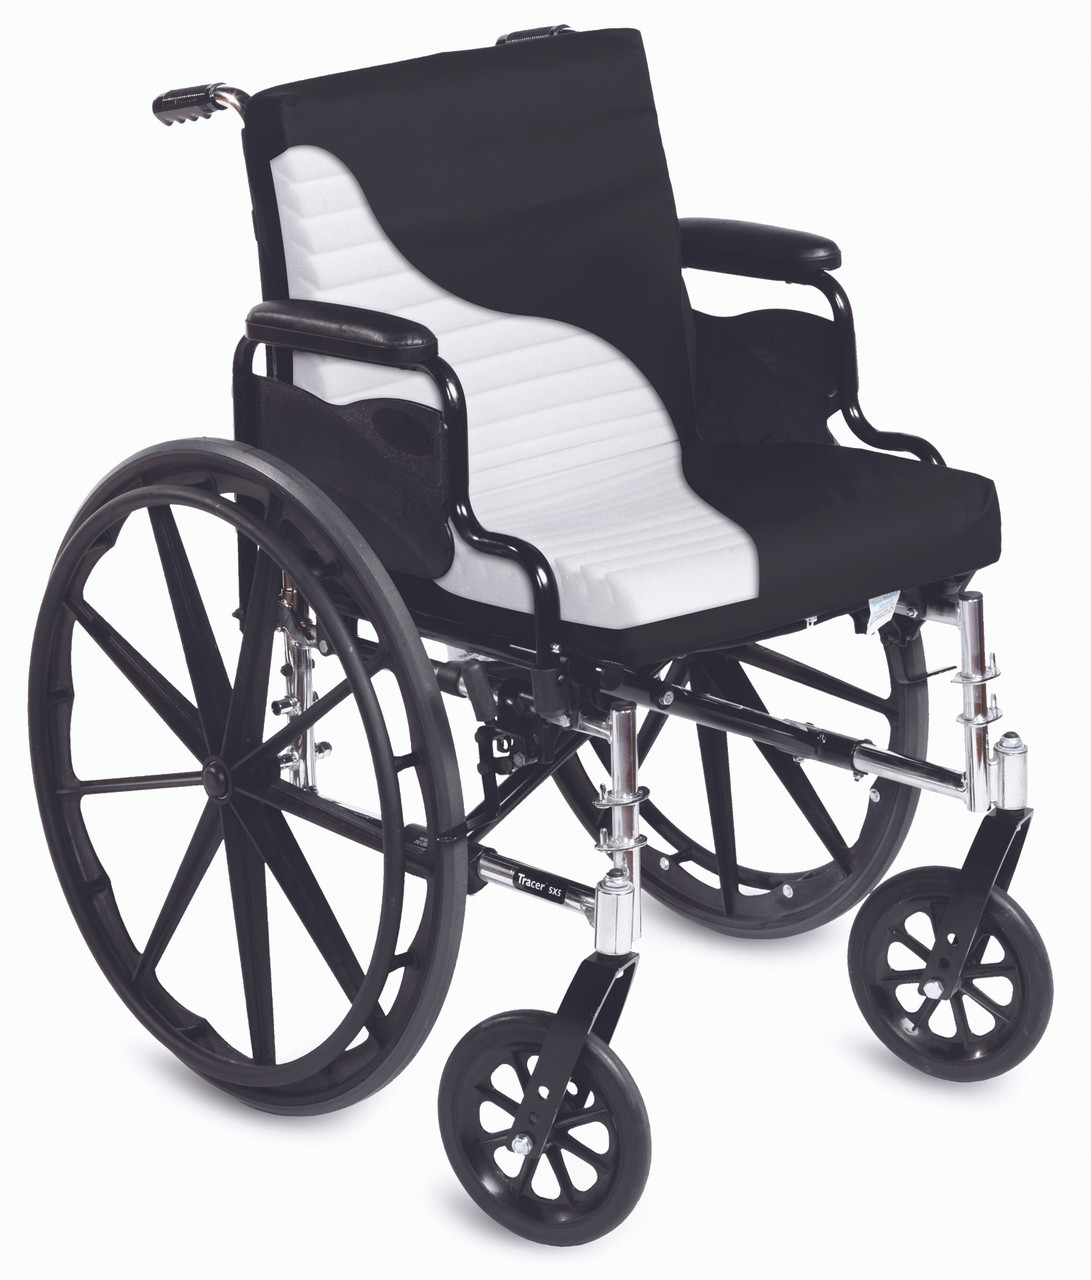 Wheelchair Seat Cushion with Air Pump for Pressure Sore Relief